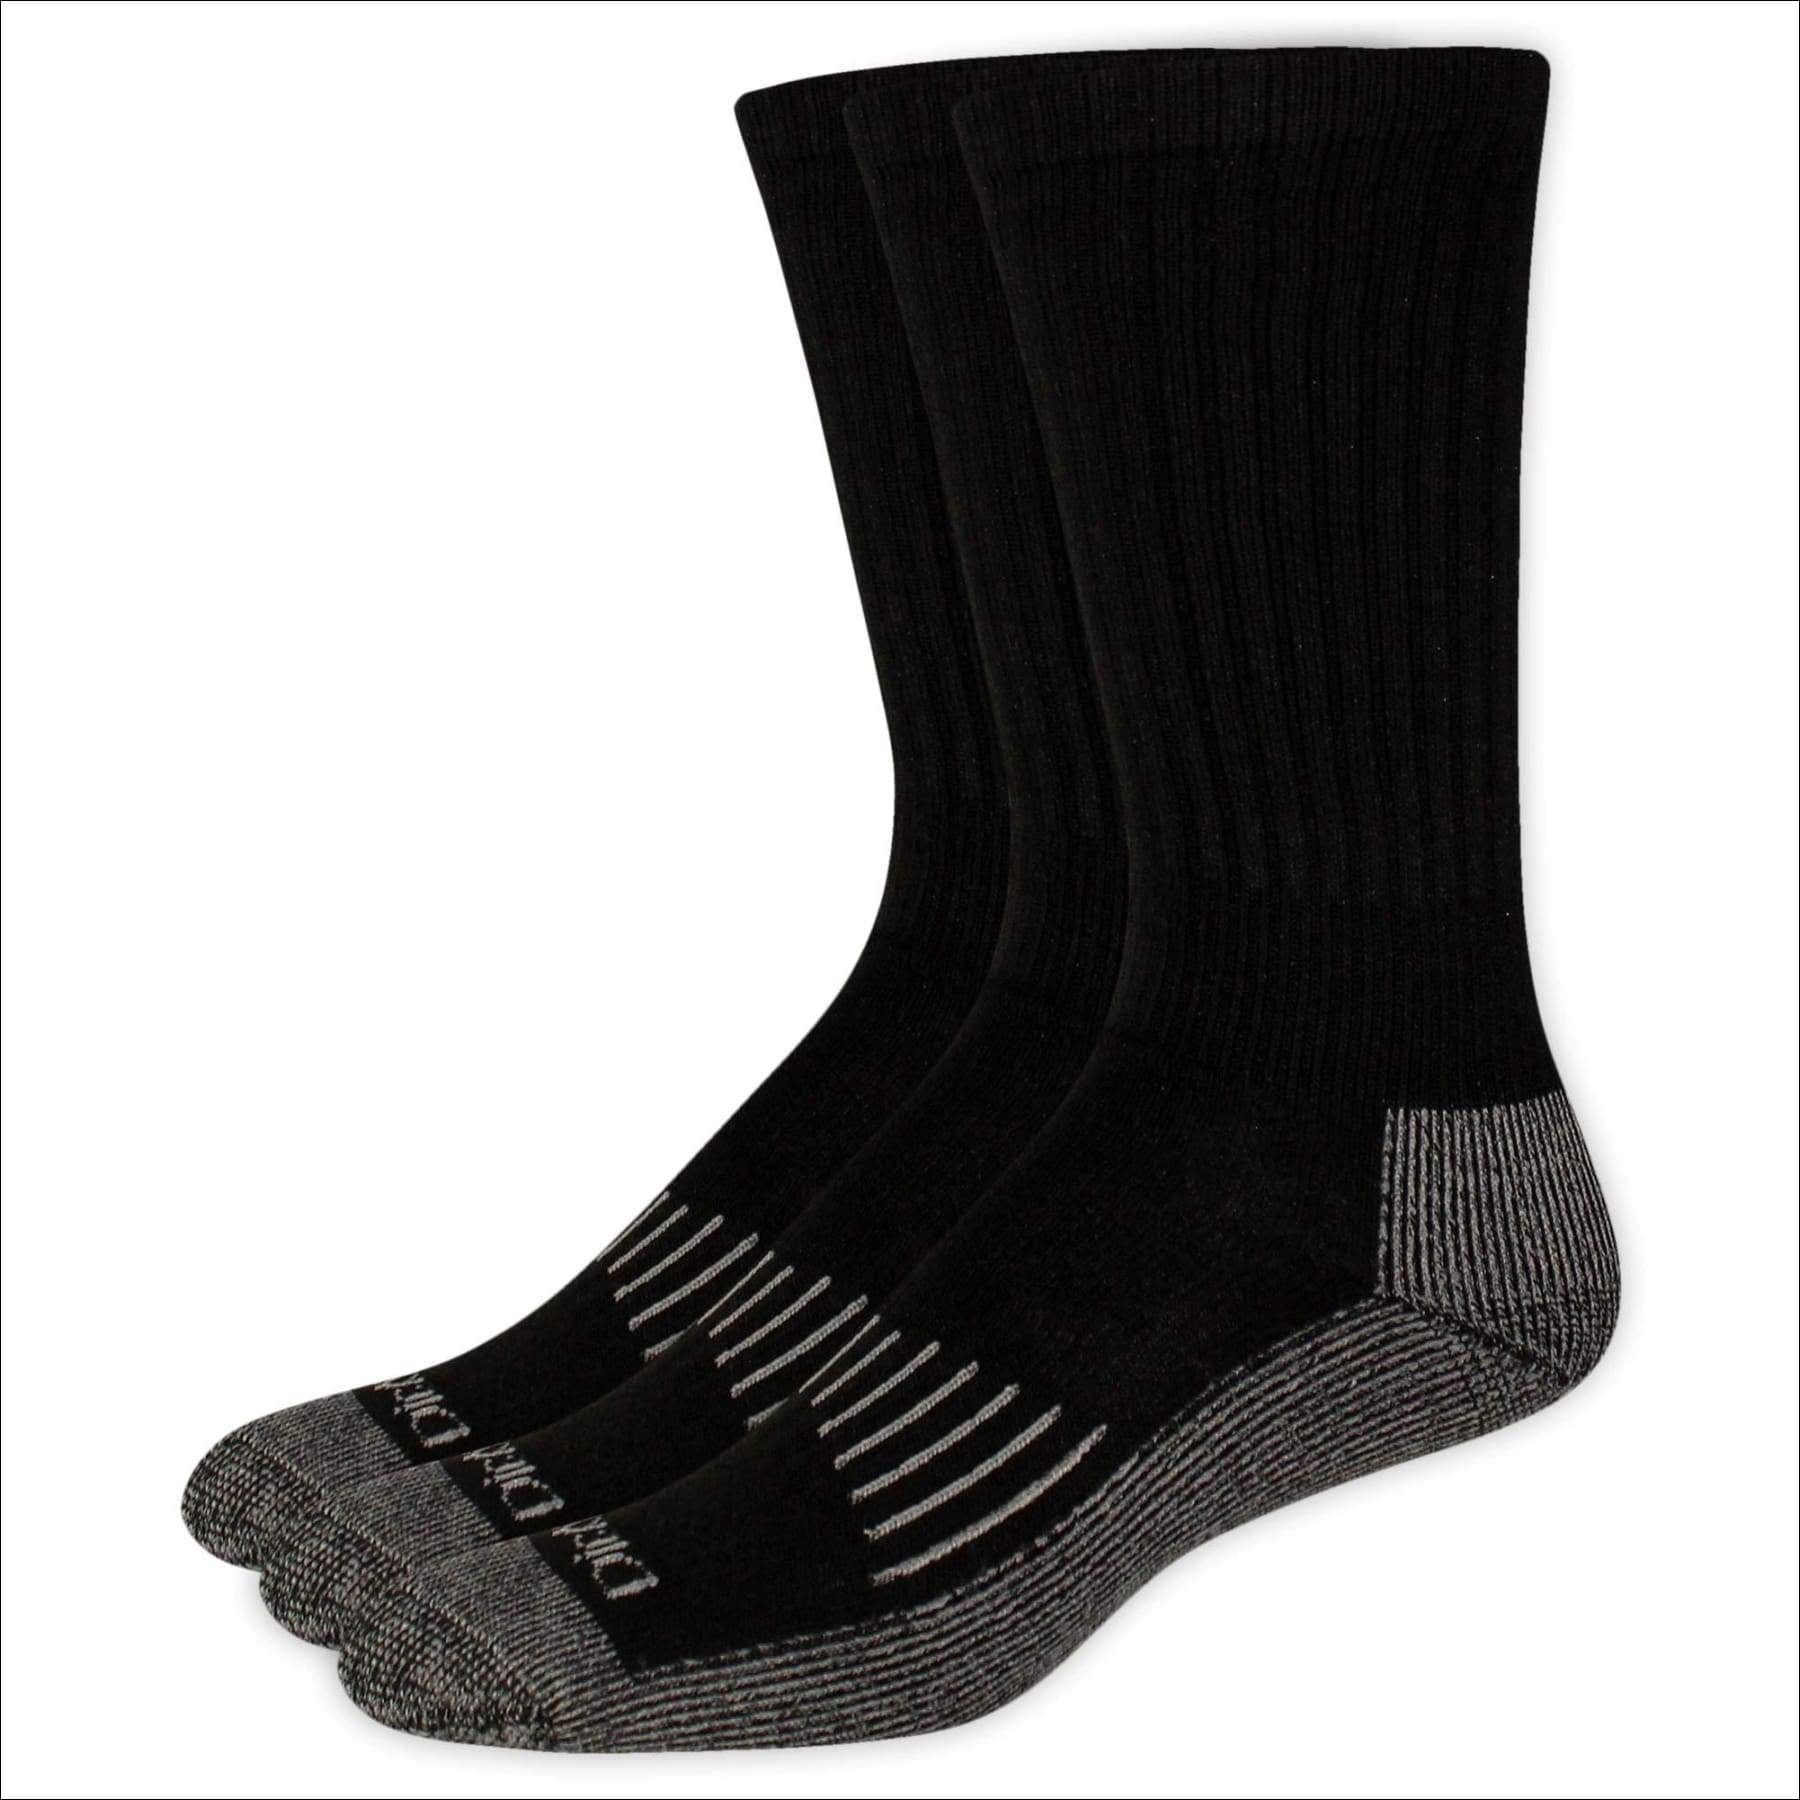 Karrimor Heavyweight Boot Sock 3 Pack Mens Gents Socks Warm 